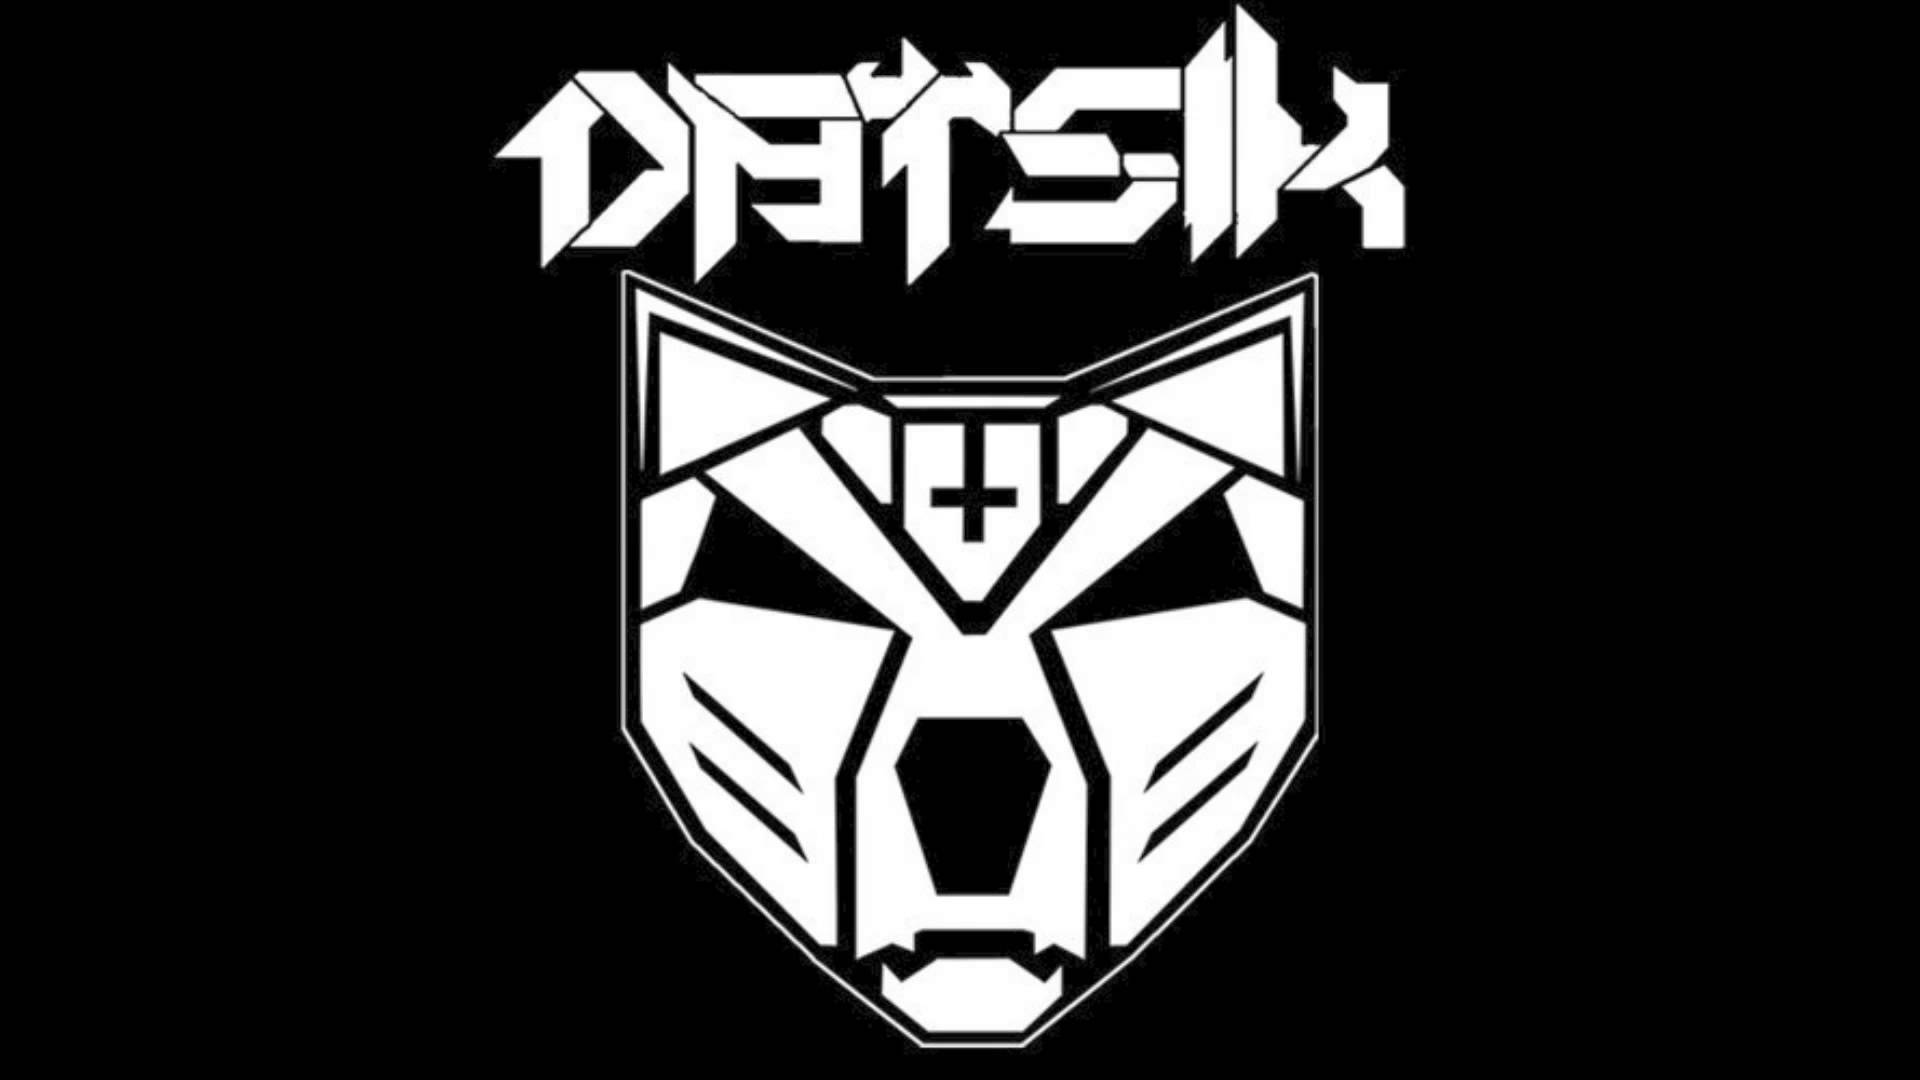 Datsik - Fully Blown (Feat. Snak The Ripper) (TyGr Remix) - YouTube